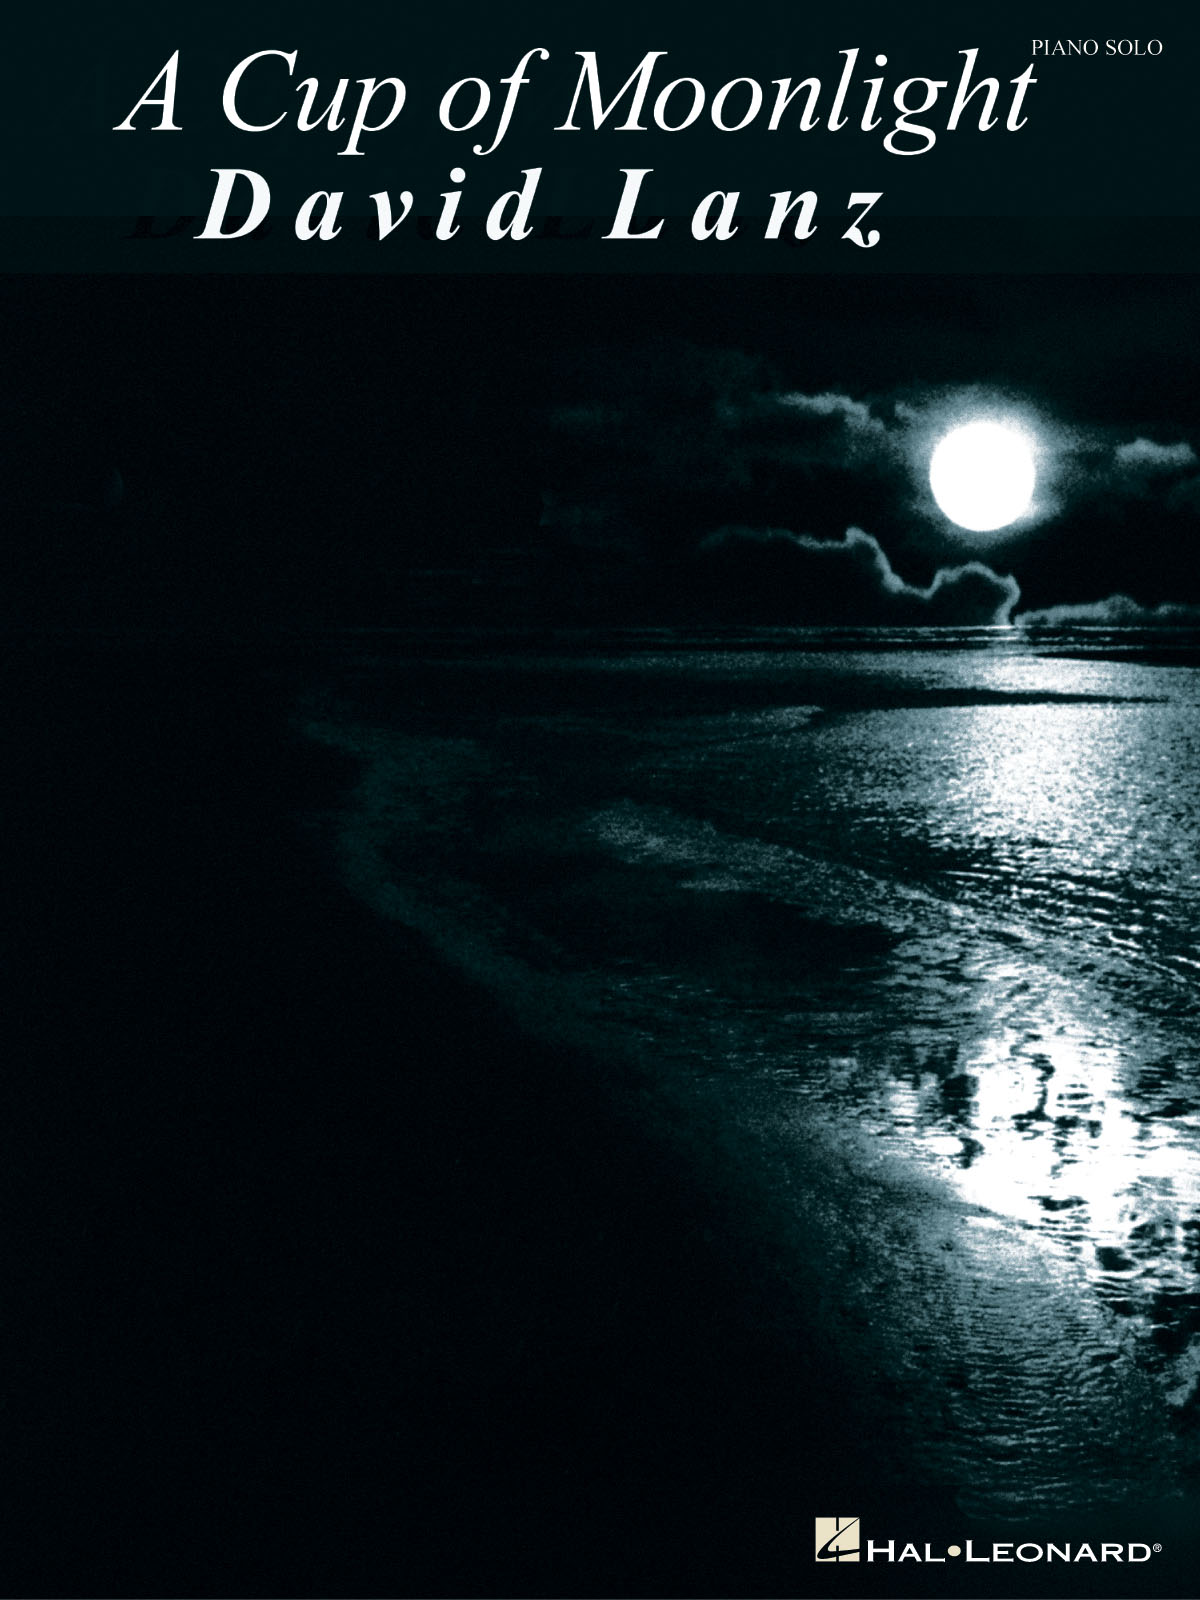 David Lanz - A Cup of Moonlight noty pro klavír